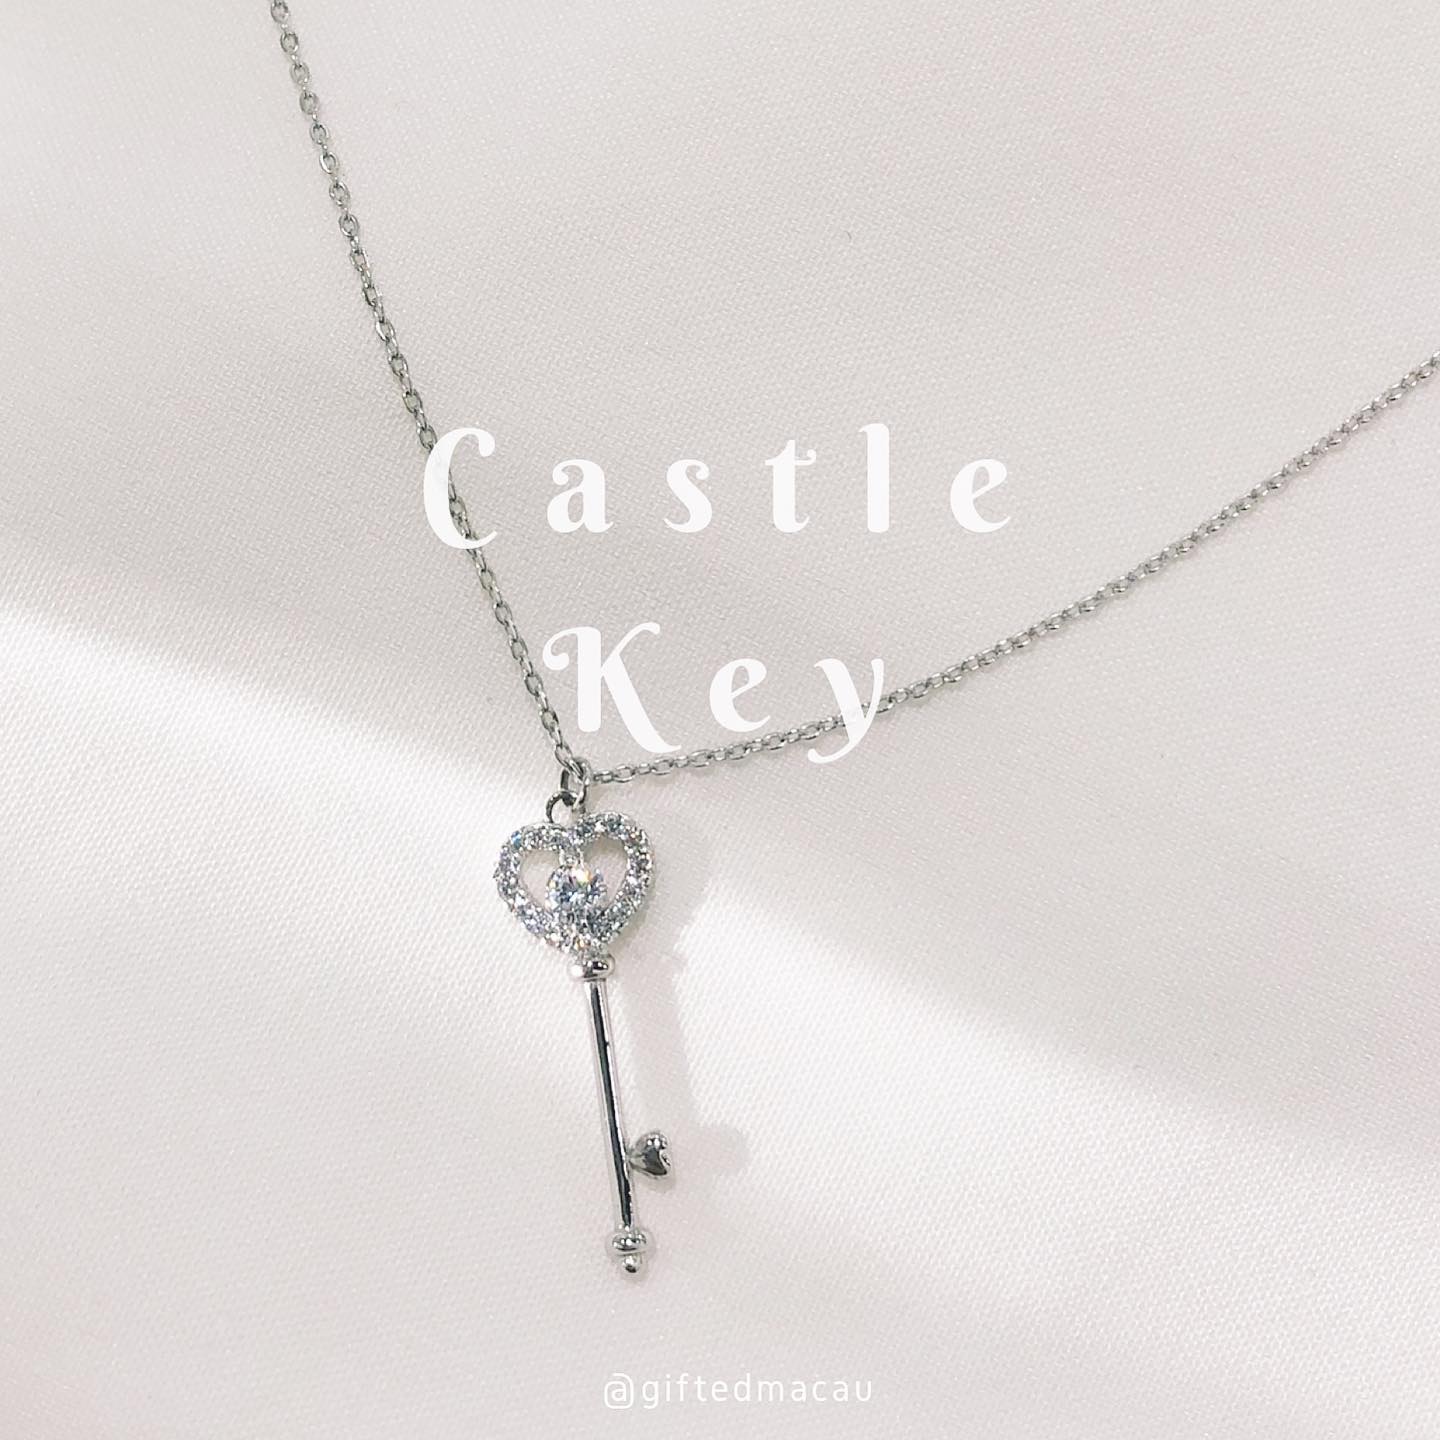 Castle Key．Fairytale Collection